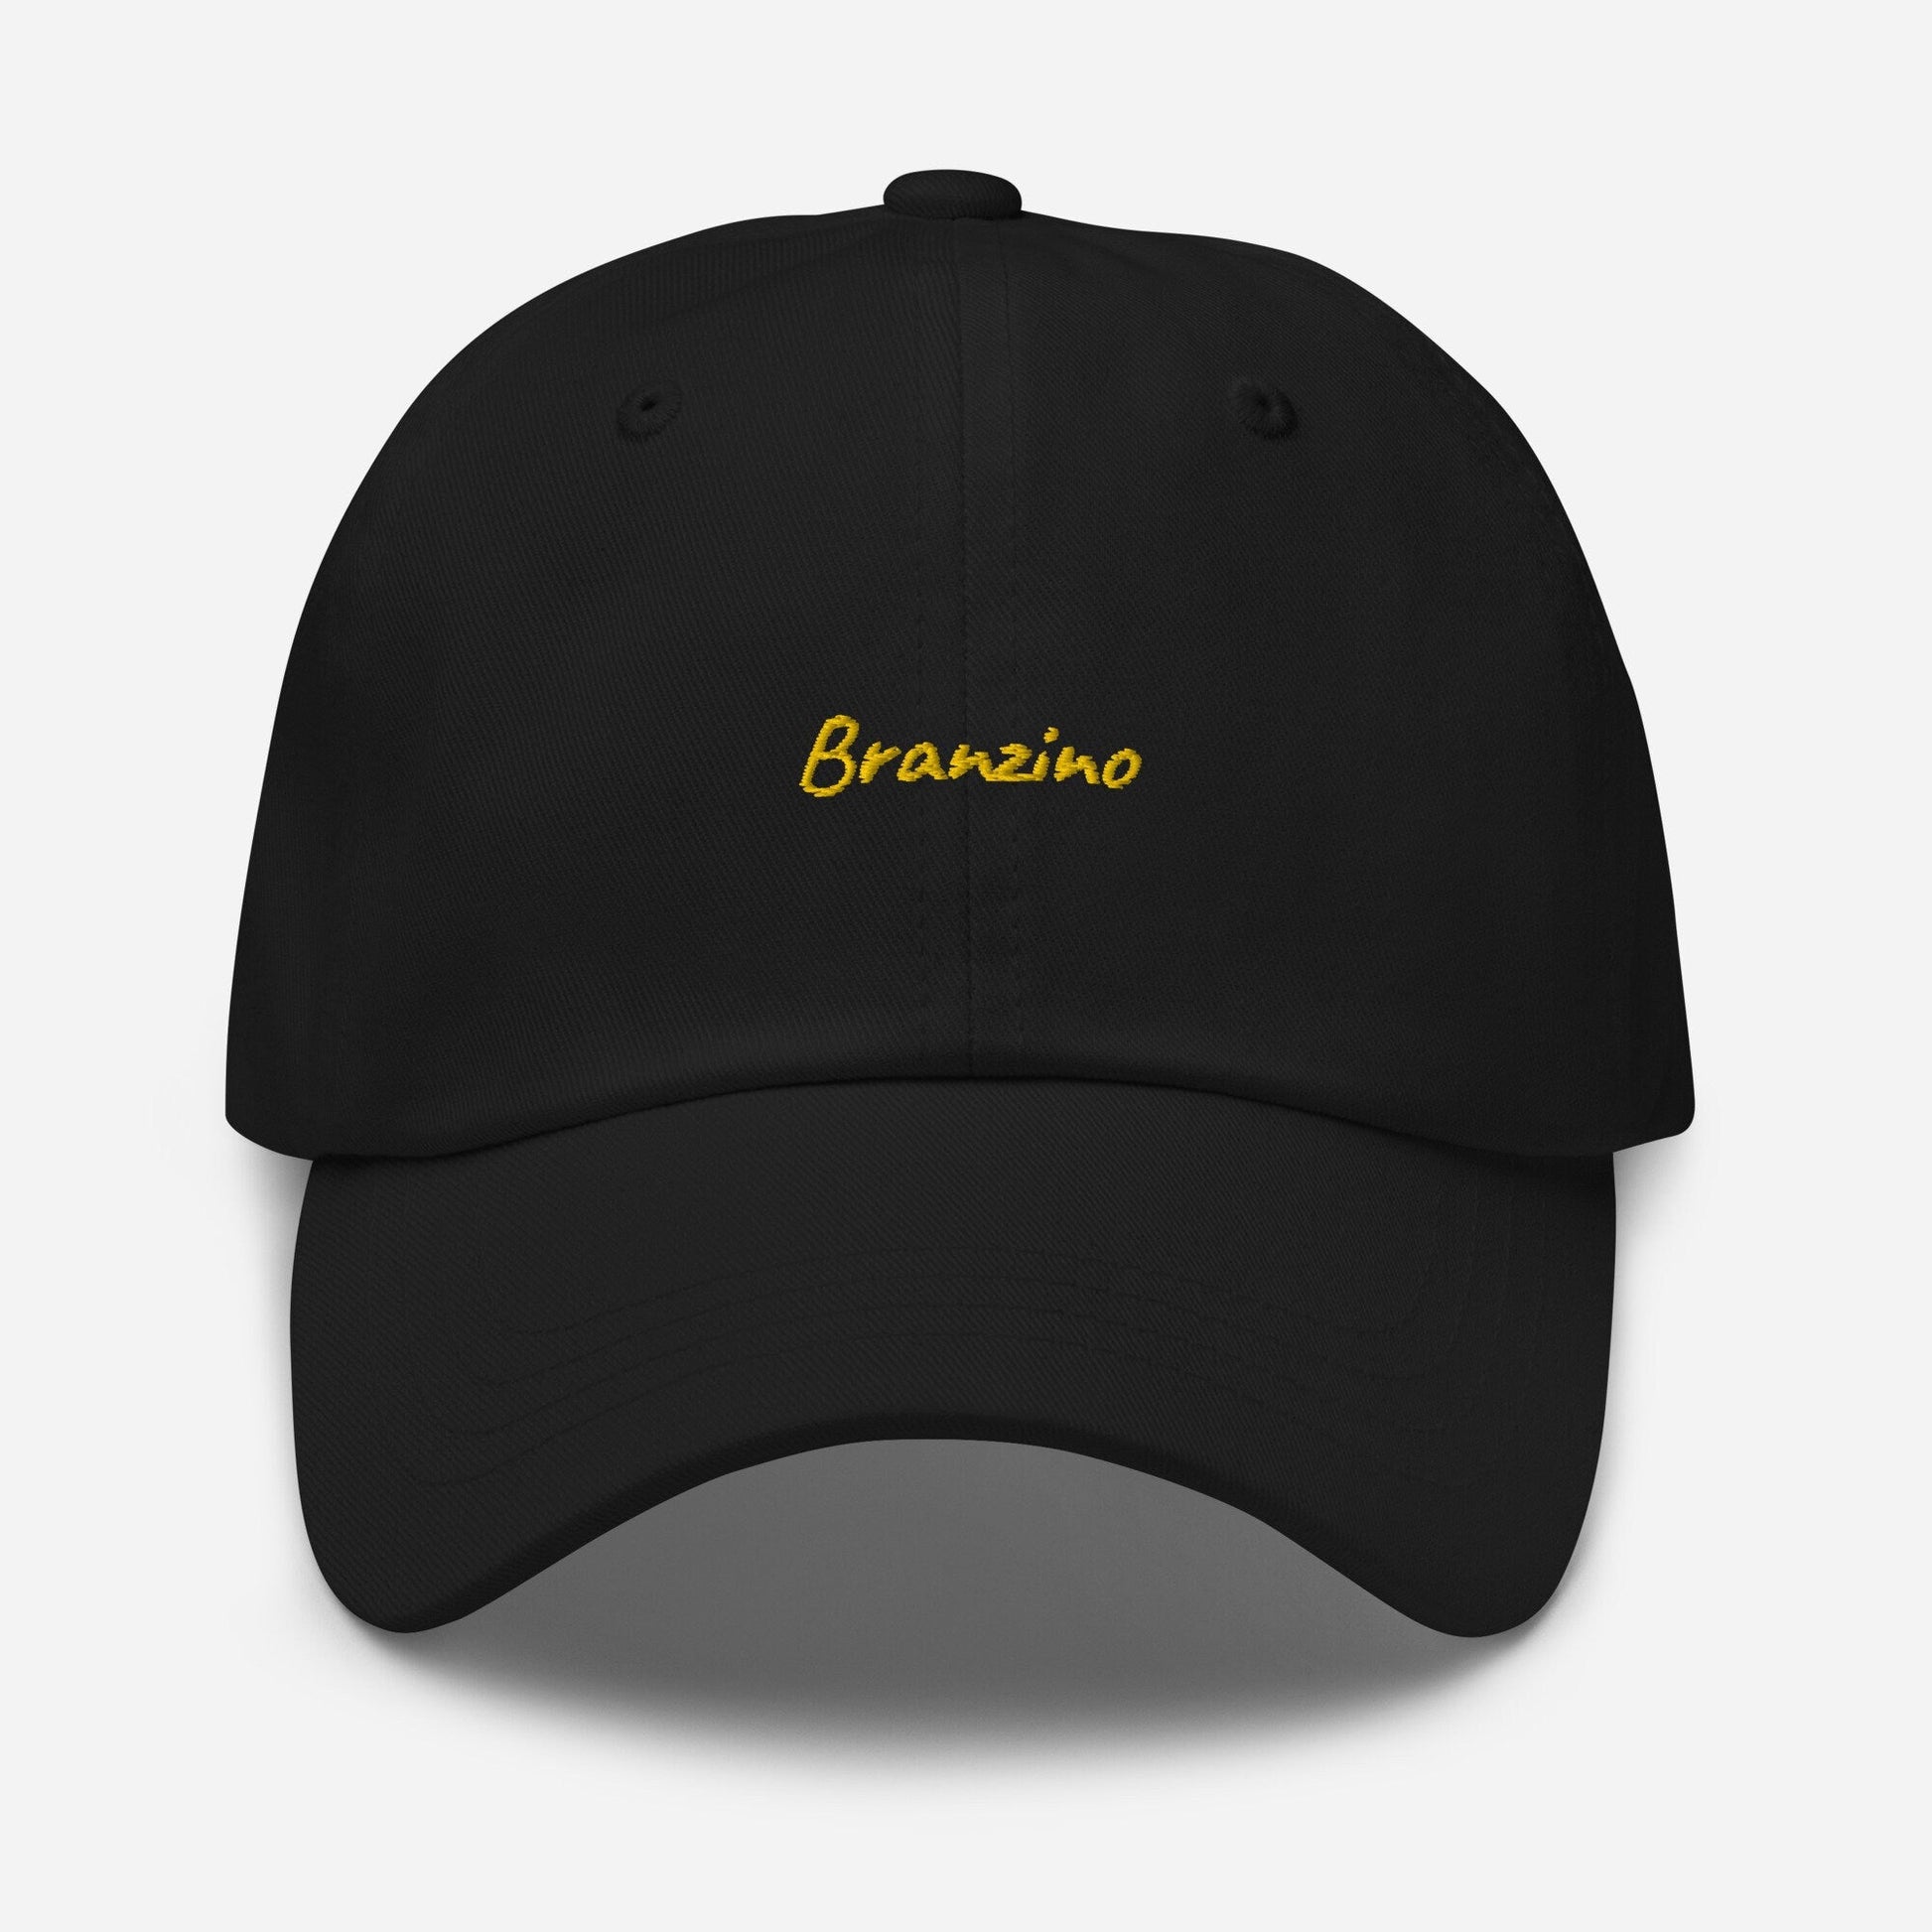 Branzino Dad Hat - Gift for Italian Mediterranean Seafood Lovers - Embroidered Cotton Cap - Evilwater Originals